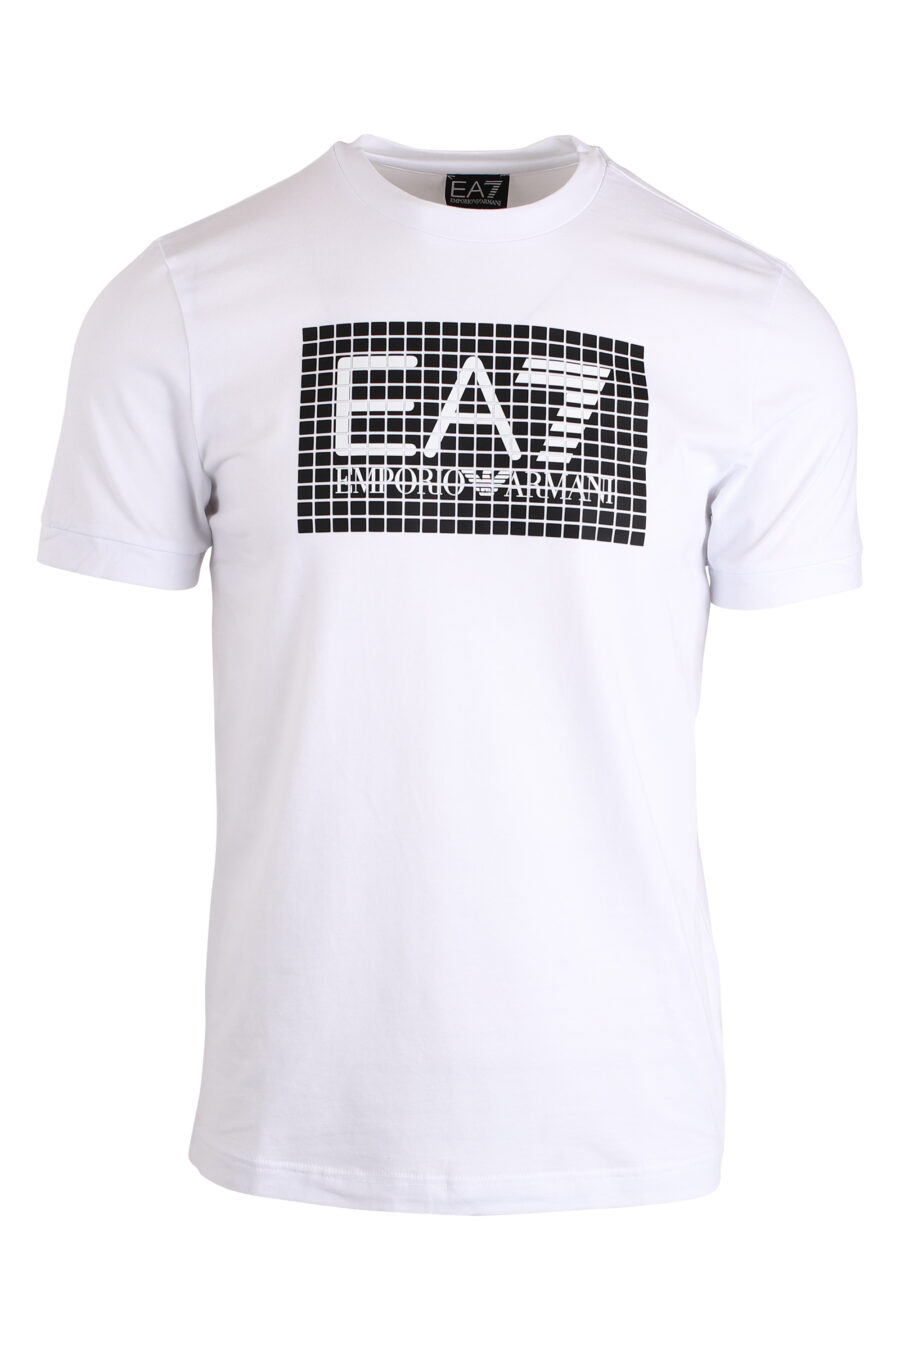 Camiseta blanca con logo "lux identity" en cuadricula - IMG 4215